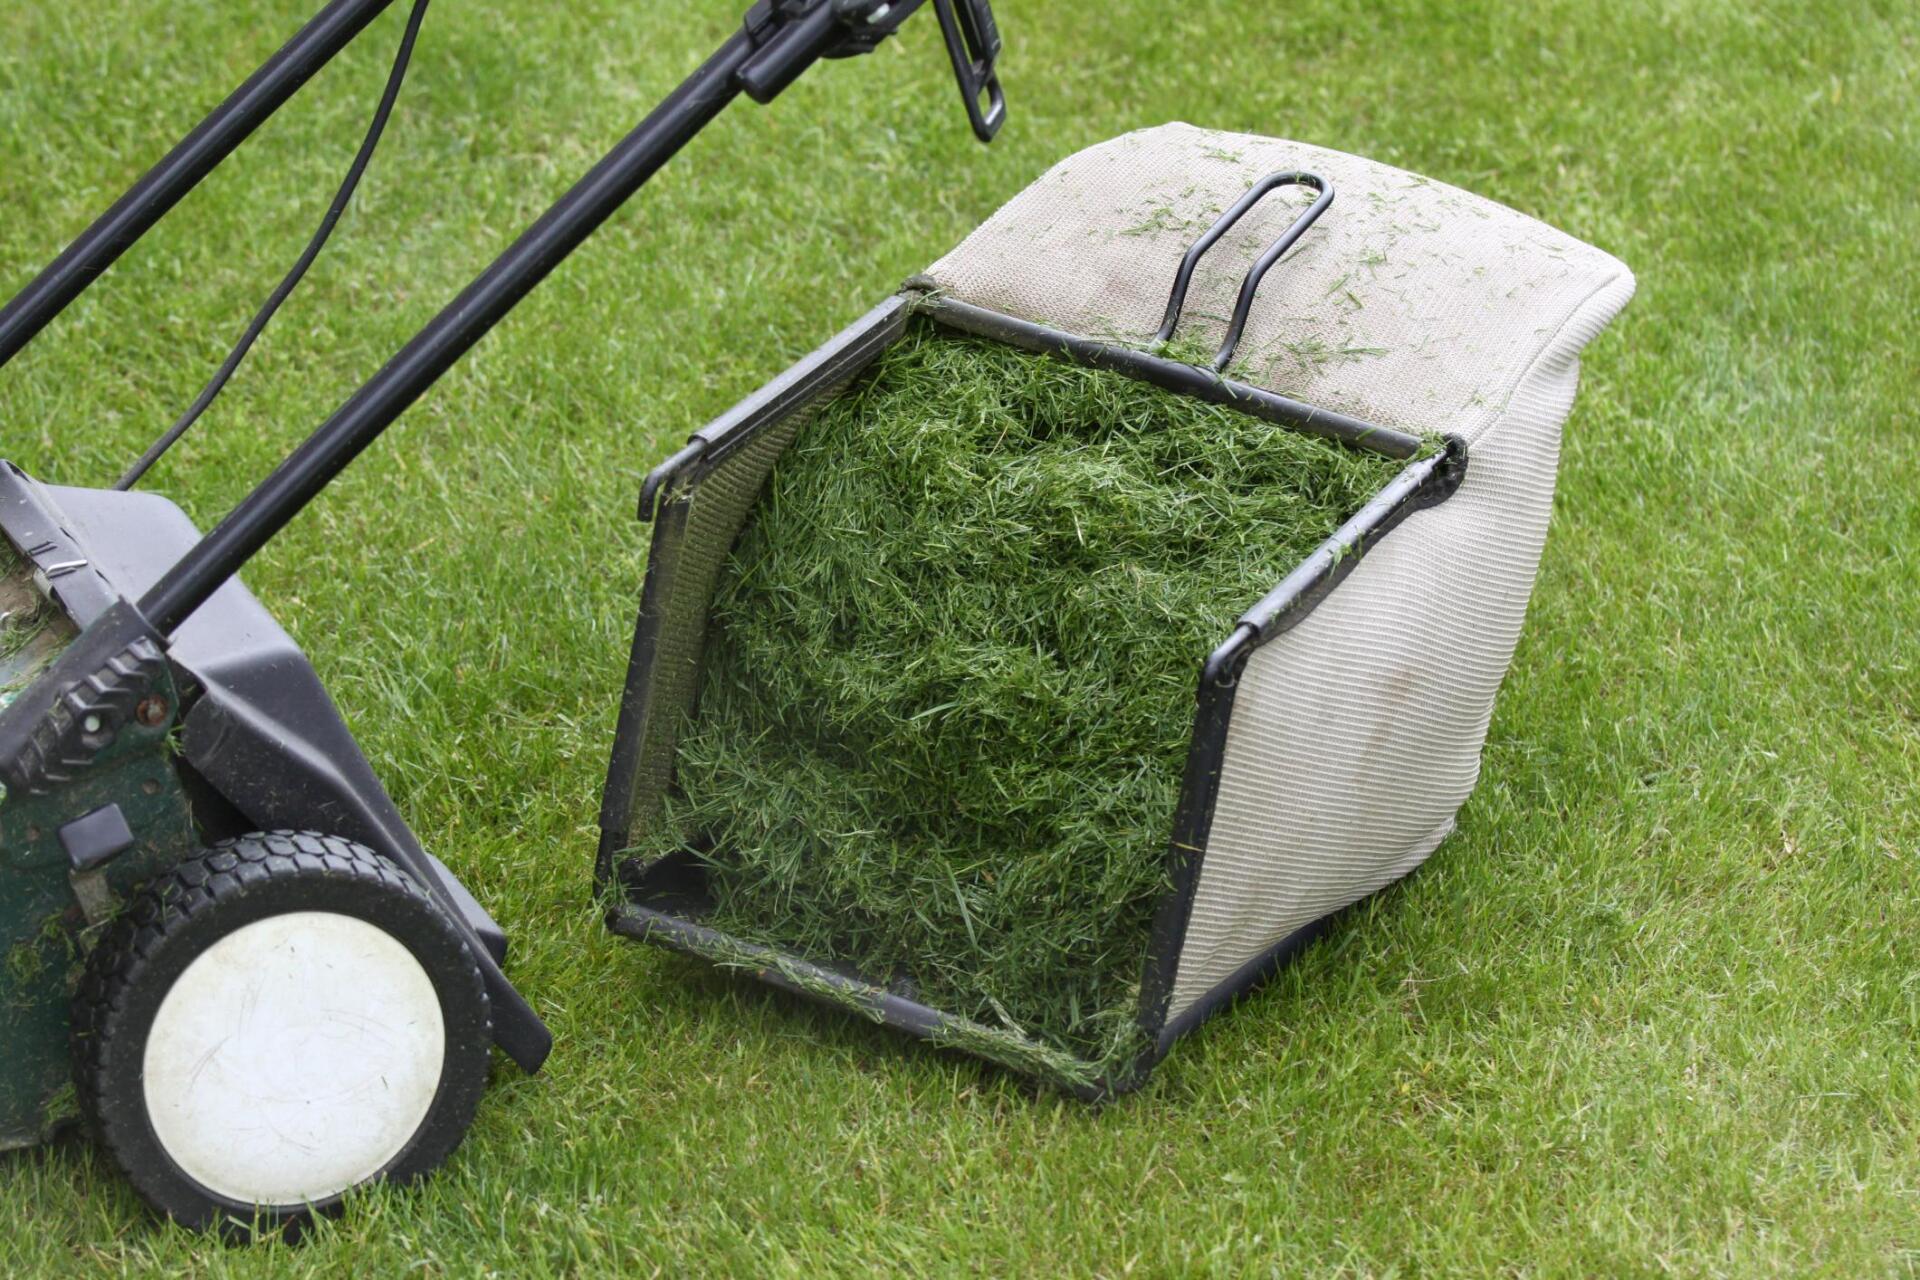 Lawn Mowing in Yorba Linda. Mowed grass collected in basket next to mower on freshly mowed residential lawn